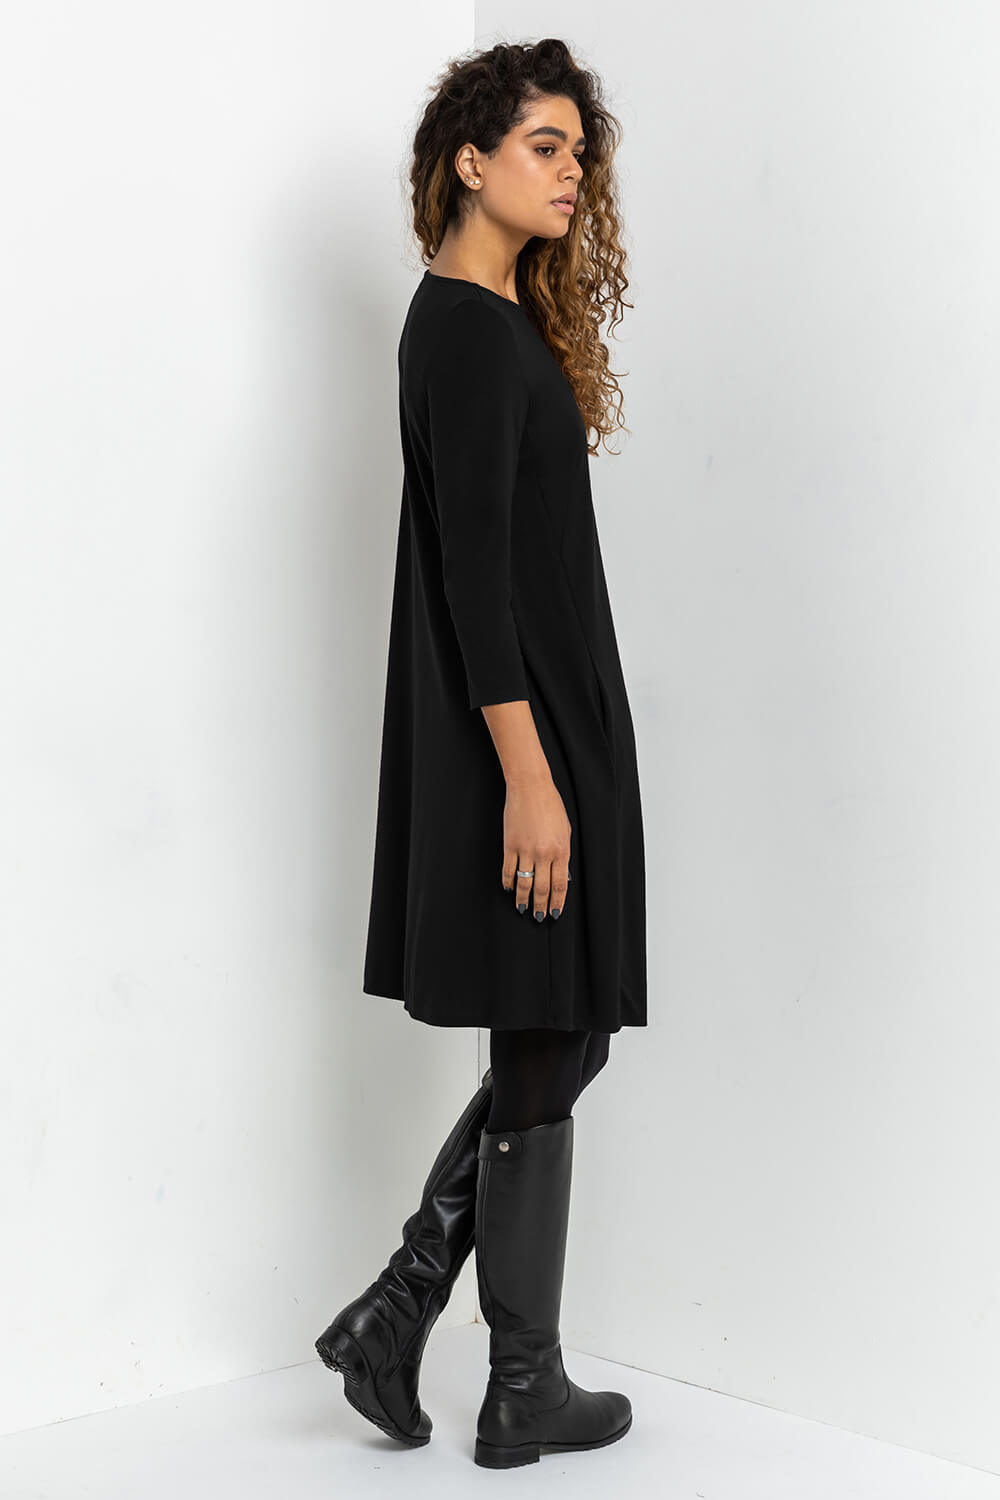 A-Line Pocket Detail Swing Dress in Black - Roman Originals UK